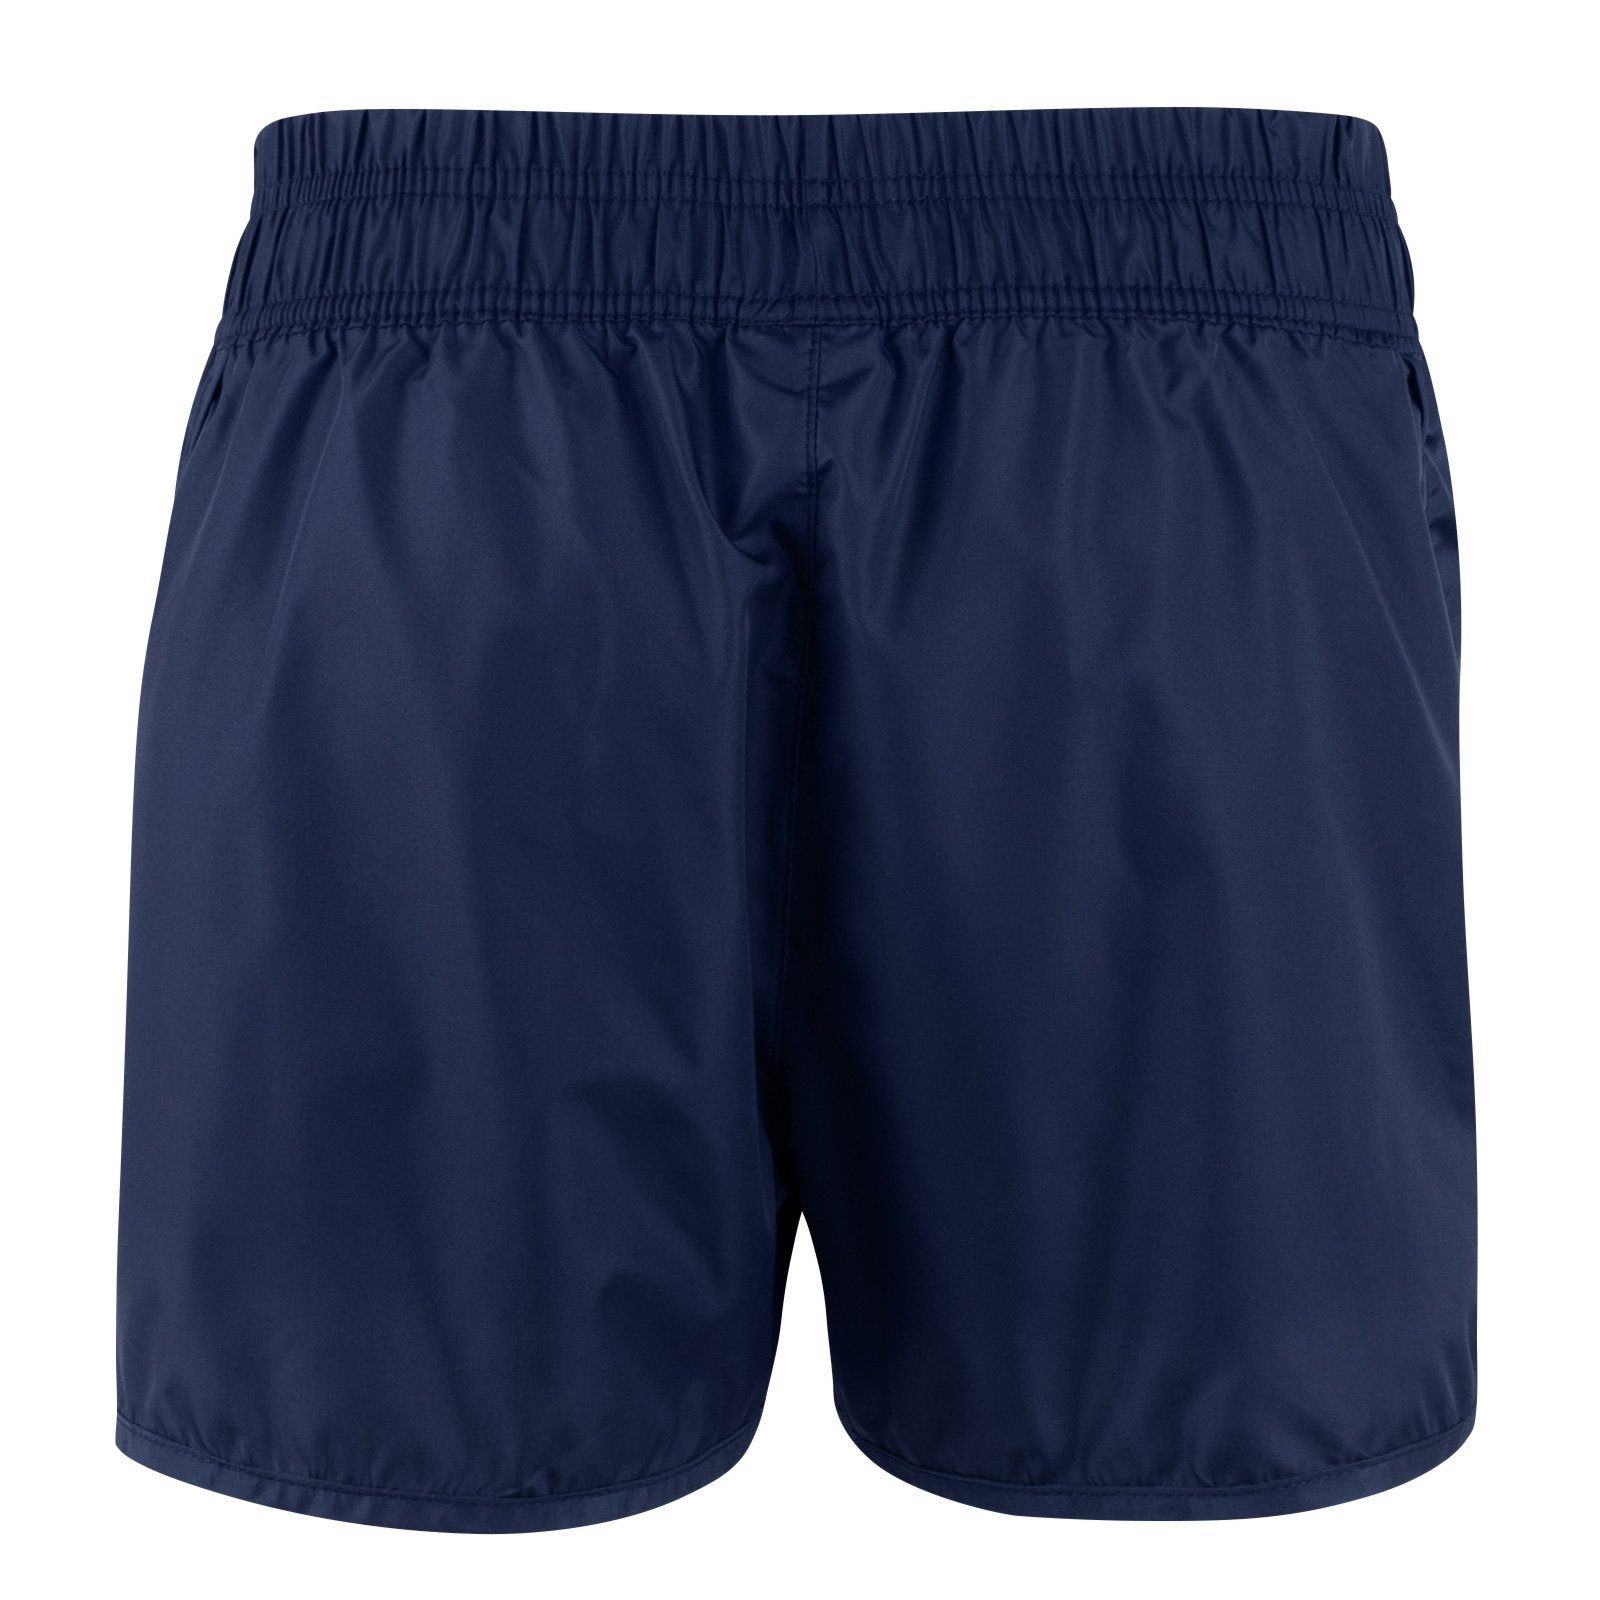 Schnelltrocknend kurze Short Dry Quick - Marineblau Material Soul® Sport Sporthose Sporthose aus Stark -